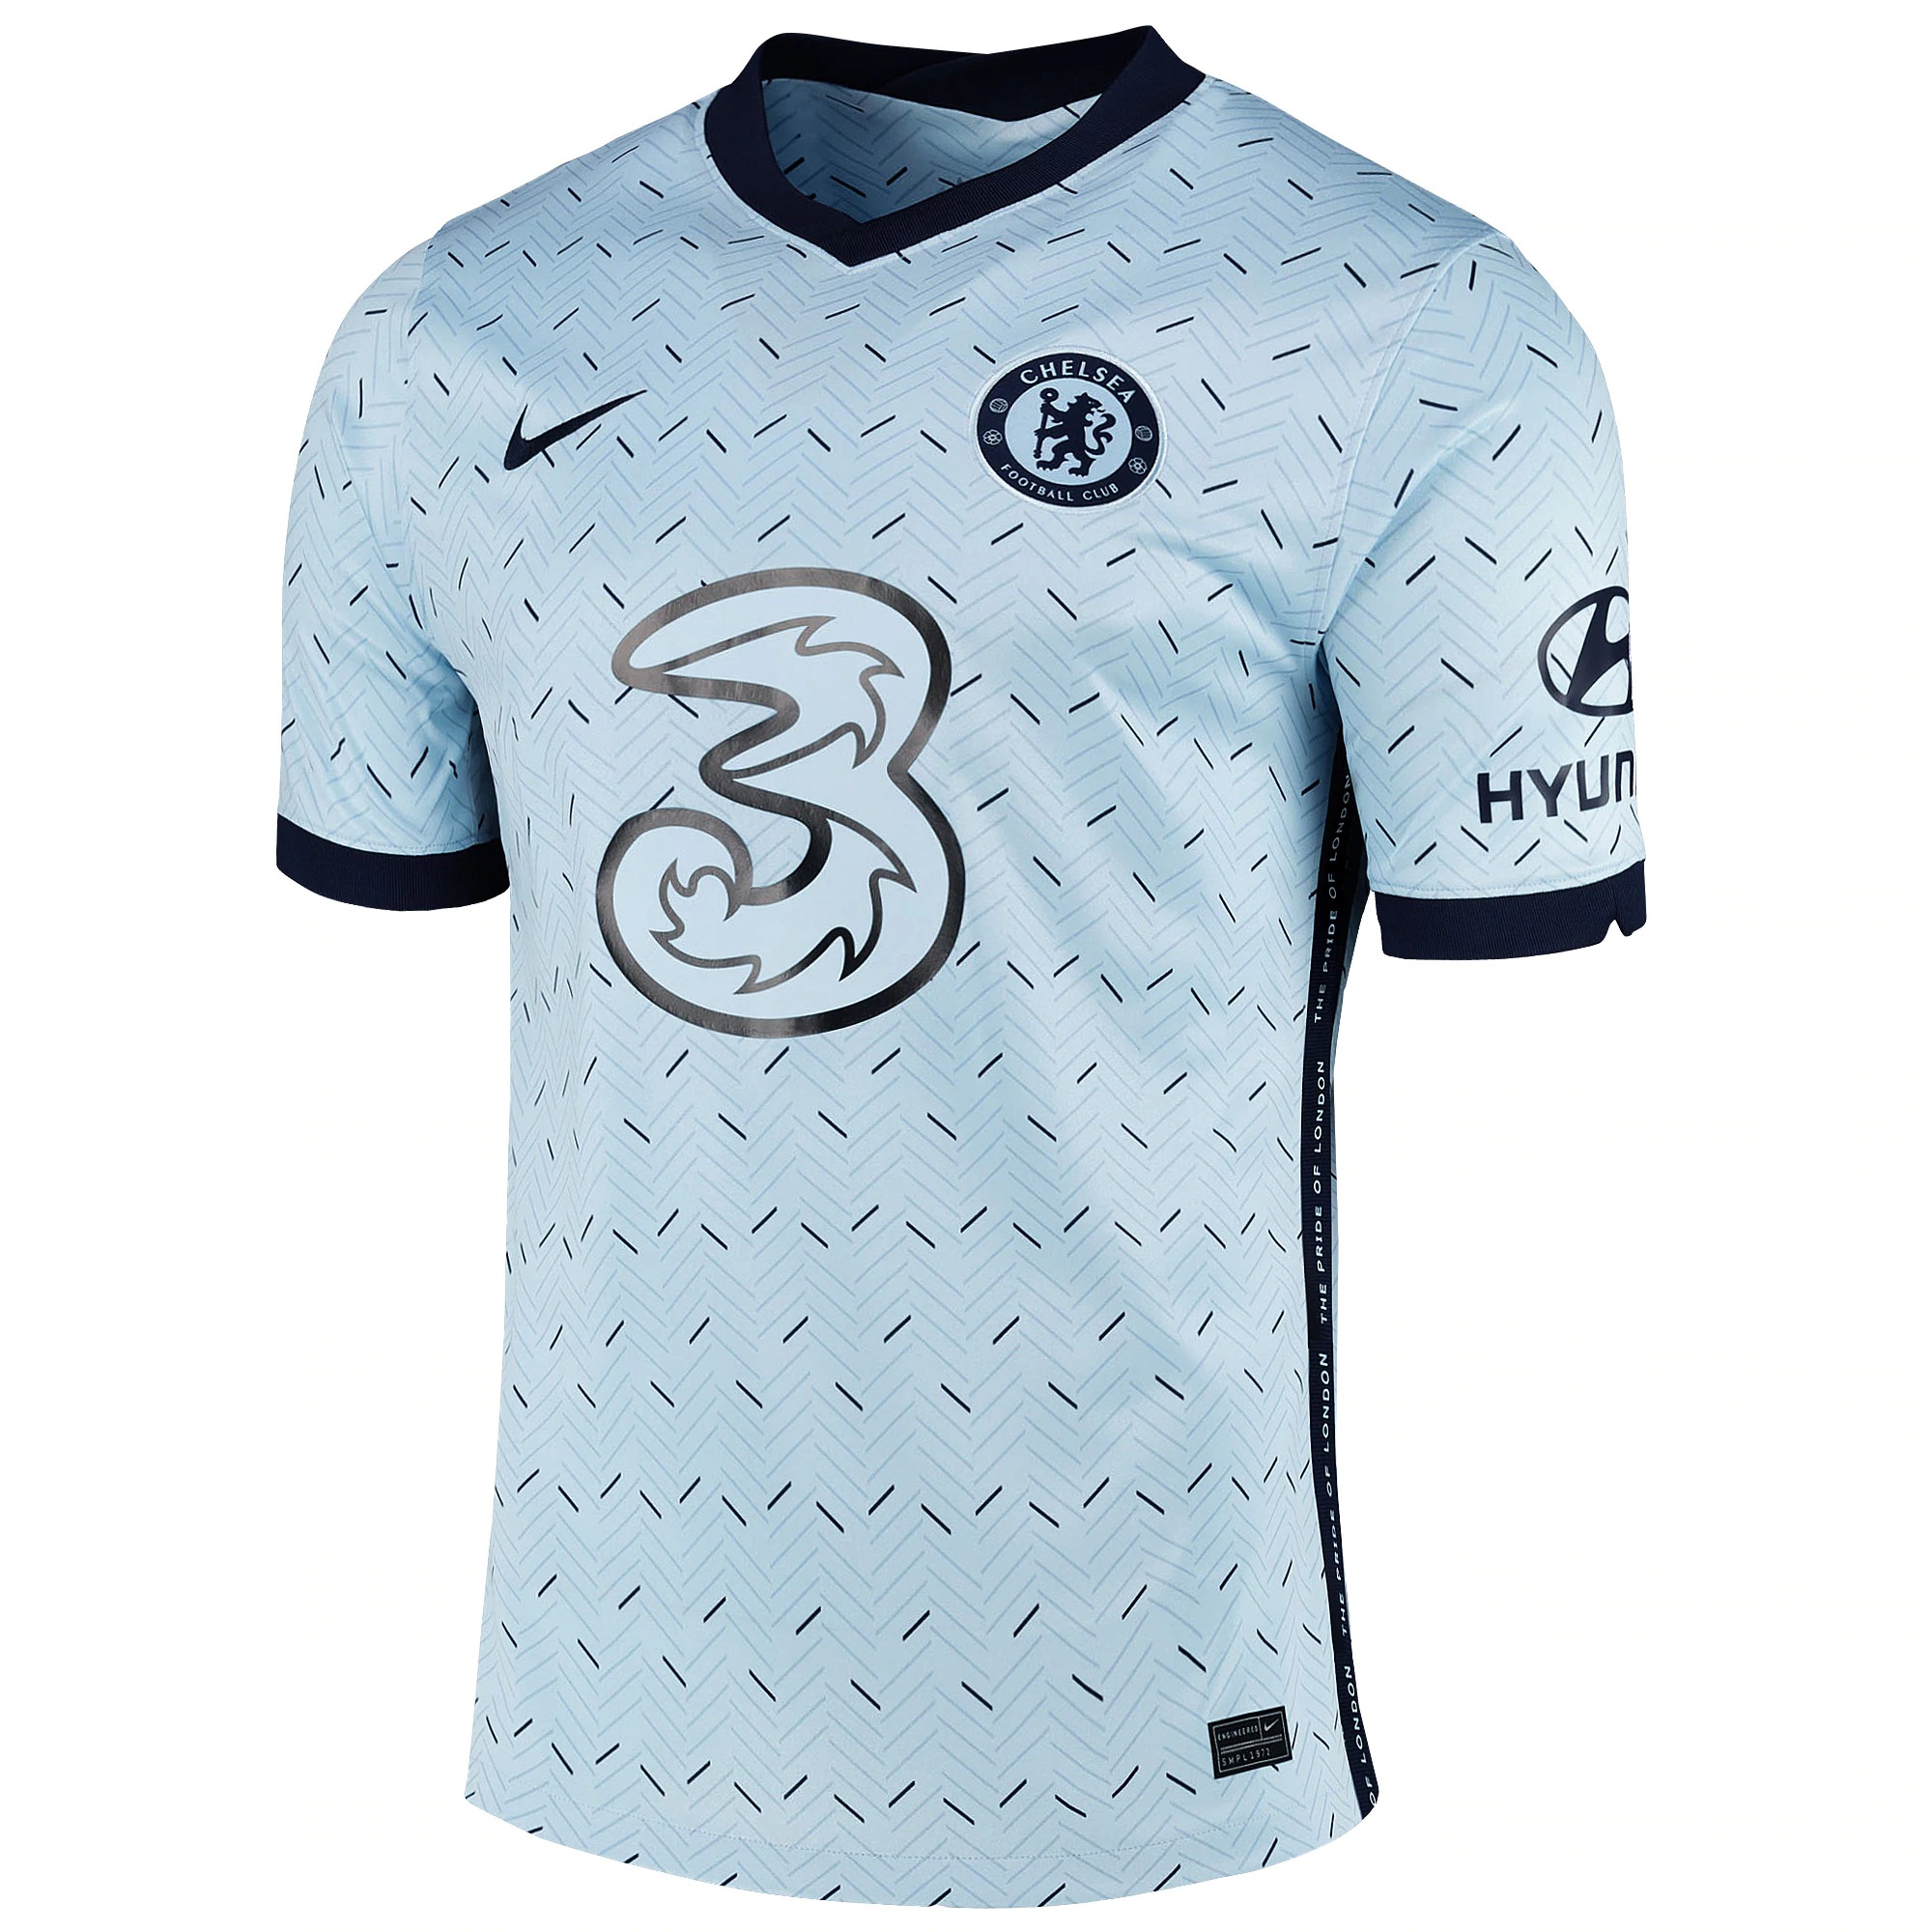 Chelsea FC Away Kit 20/21 - FOOTBALL KITS 21